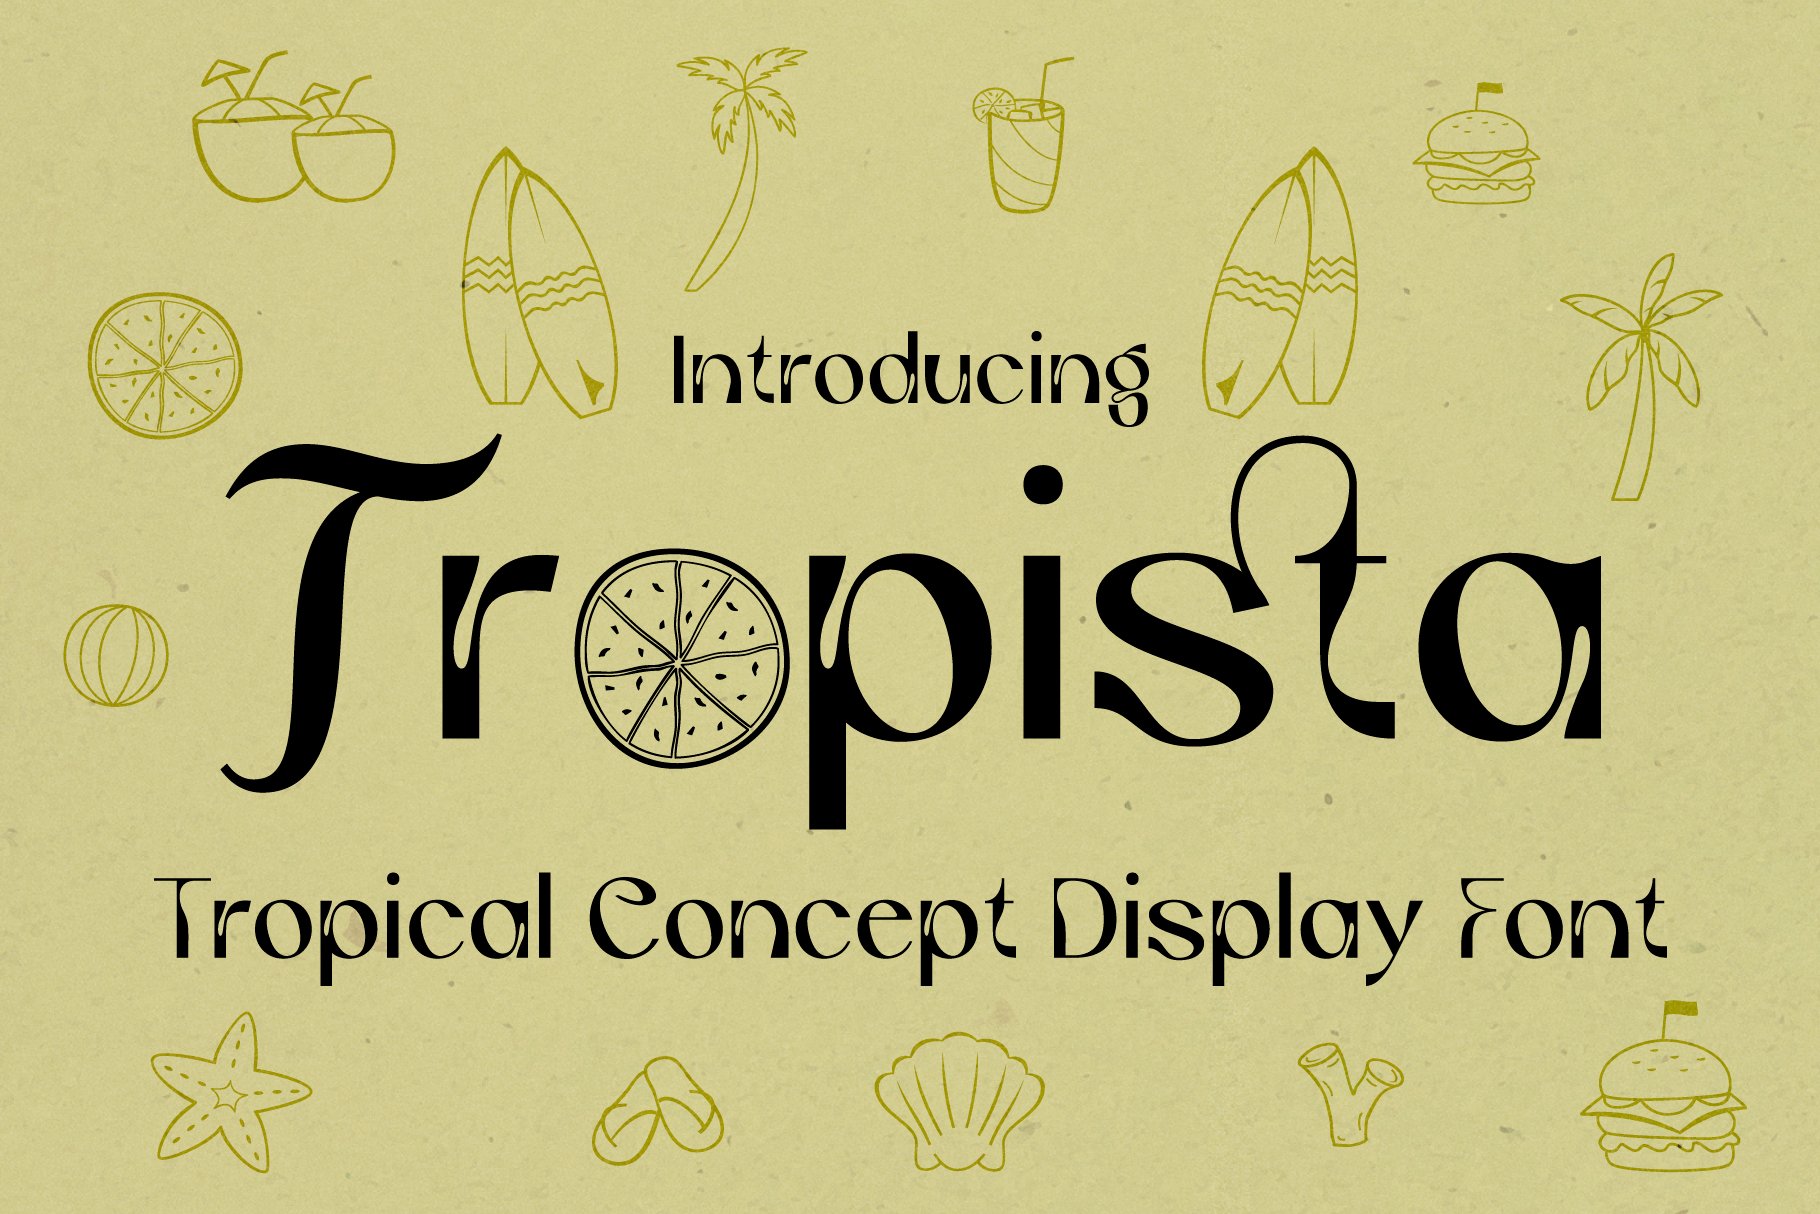 Tropista Tropical Concept cover image.